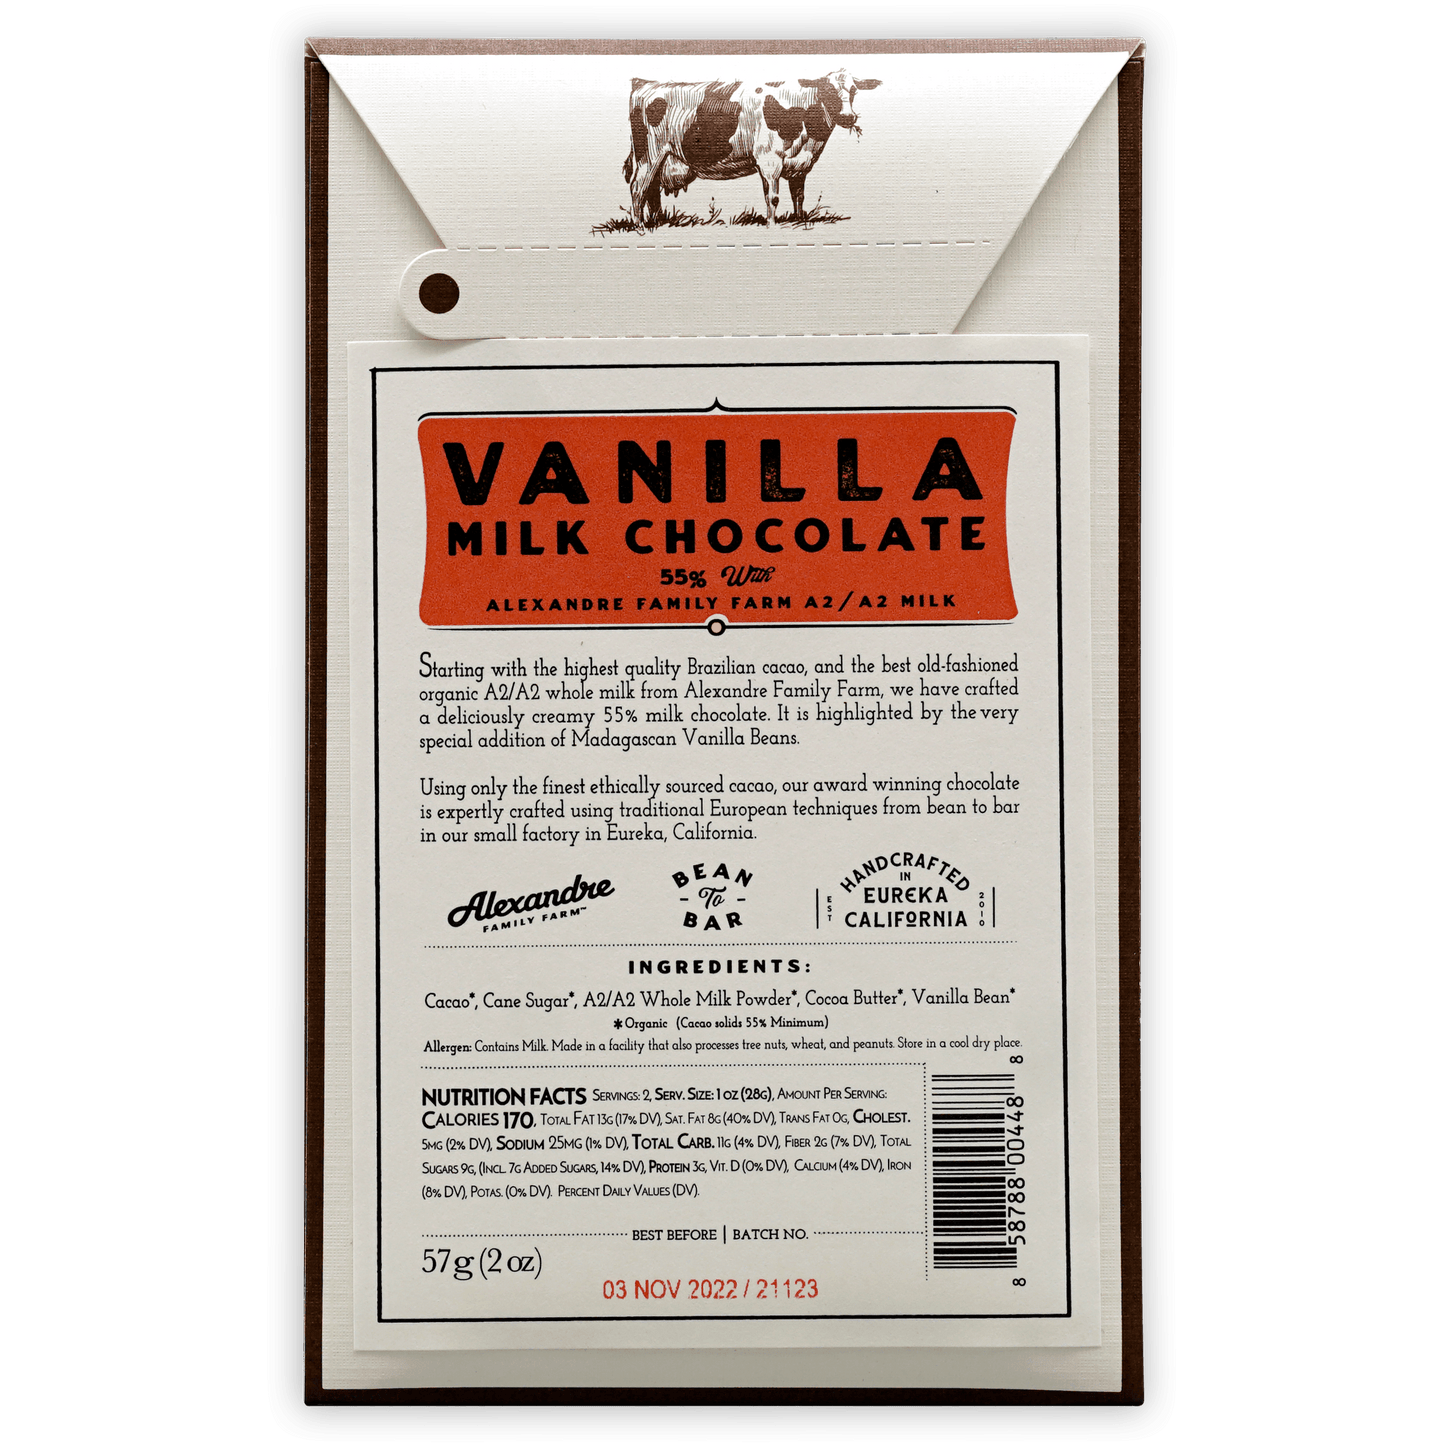 Dick Taylor Vanilla Milk Chocolate 55%